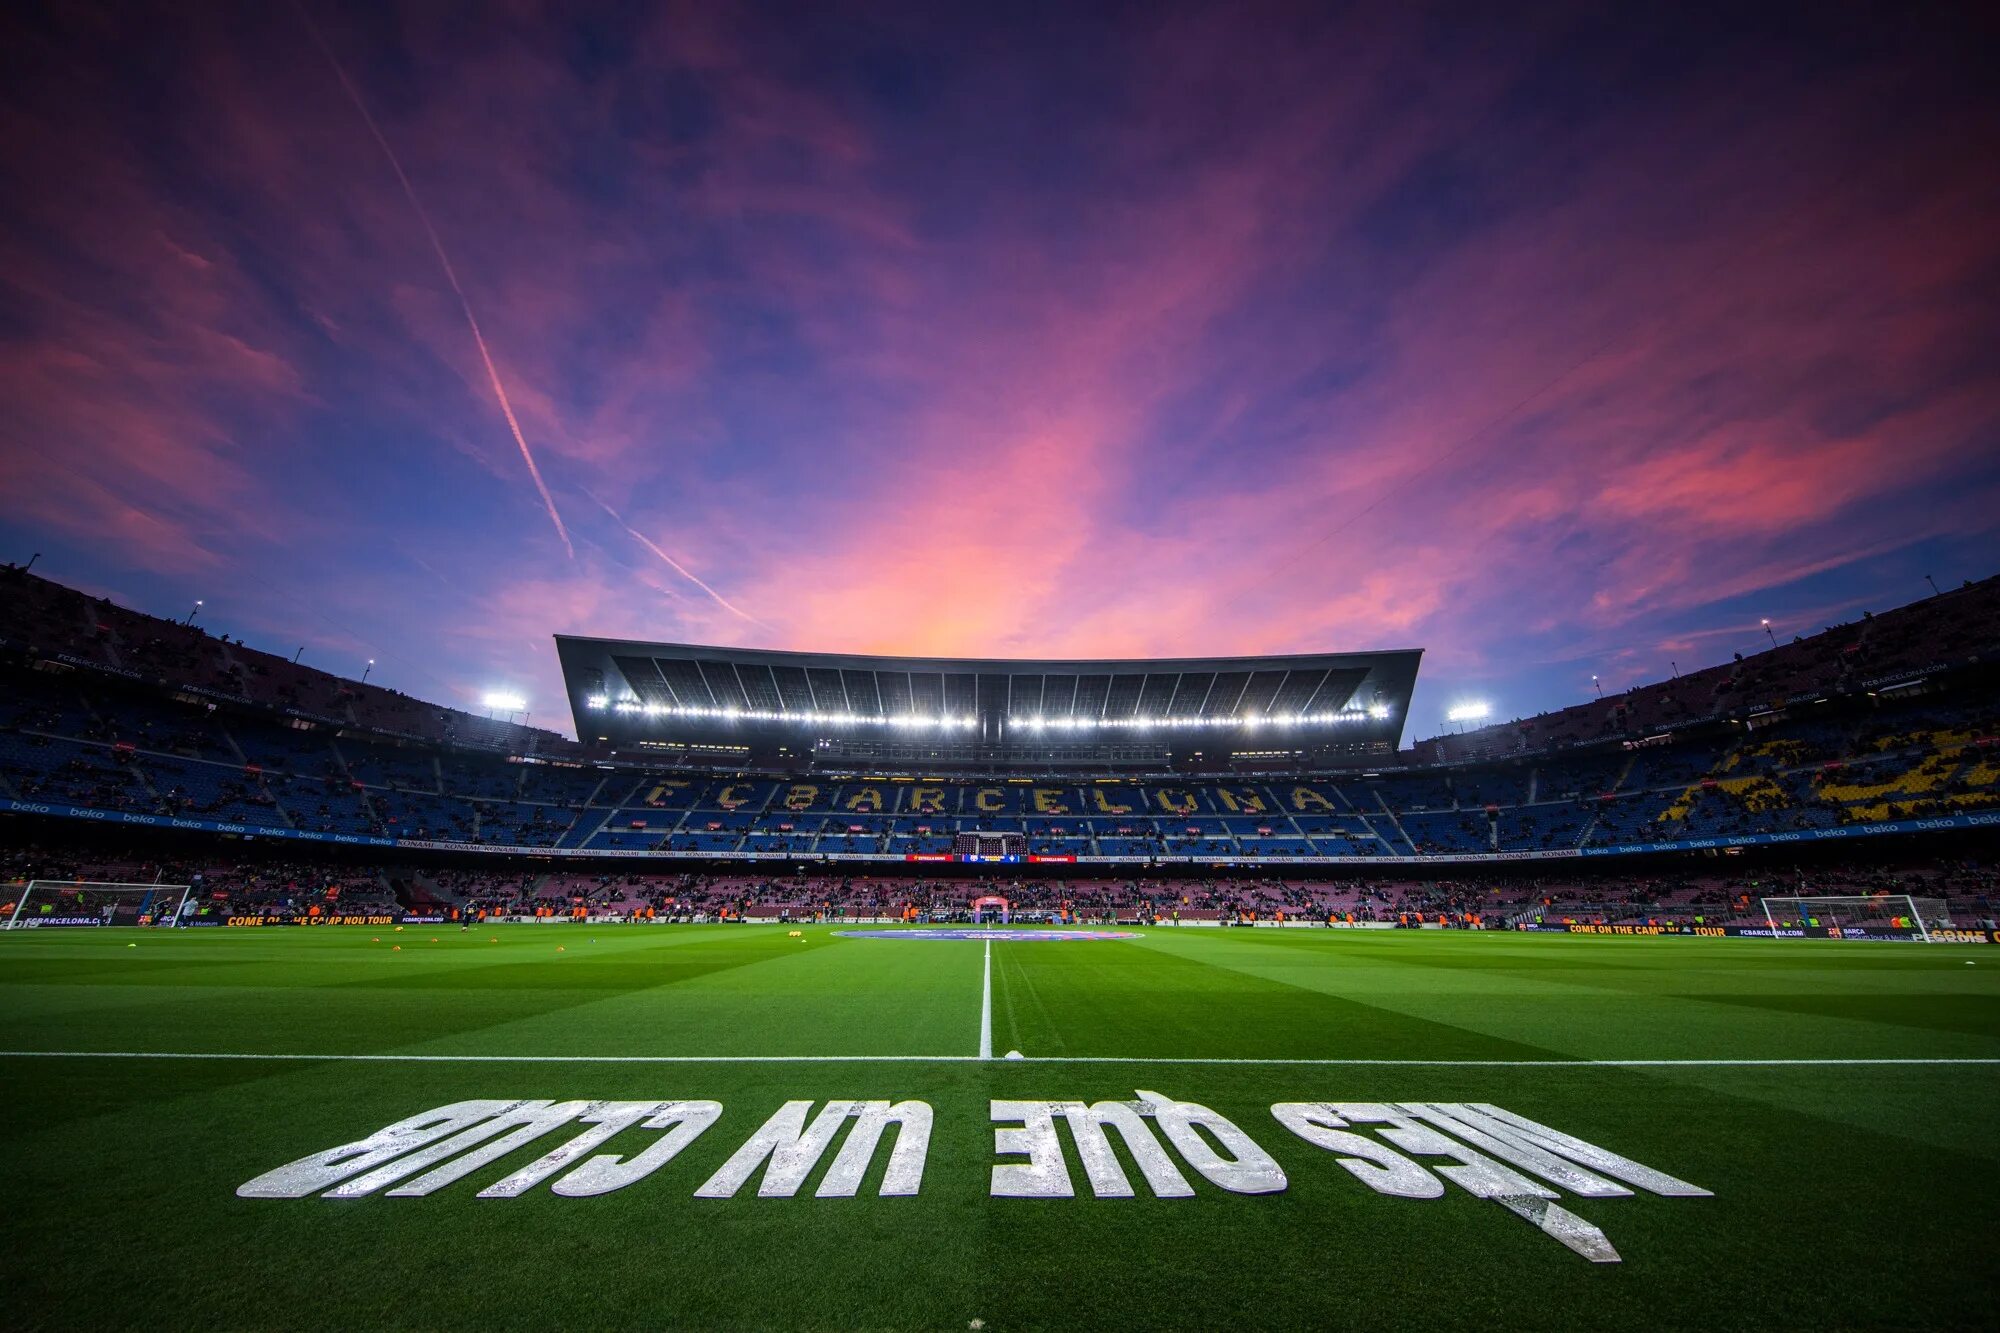 Граждан стадион. Стадион Камп ноу в Барселоне. ФК Барселона Камп ноу. Камп ноу стадион 2020. Стадион Camp nou FC Barcelona.